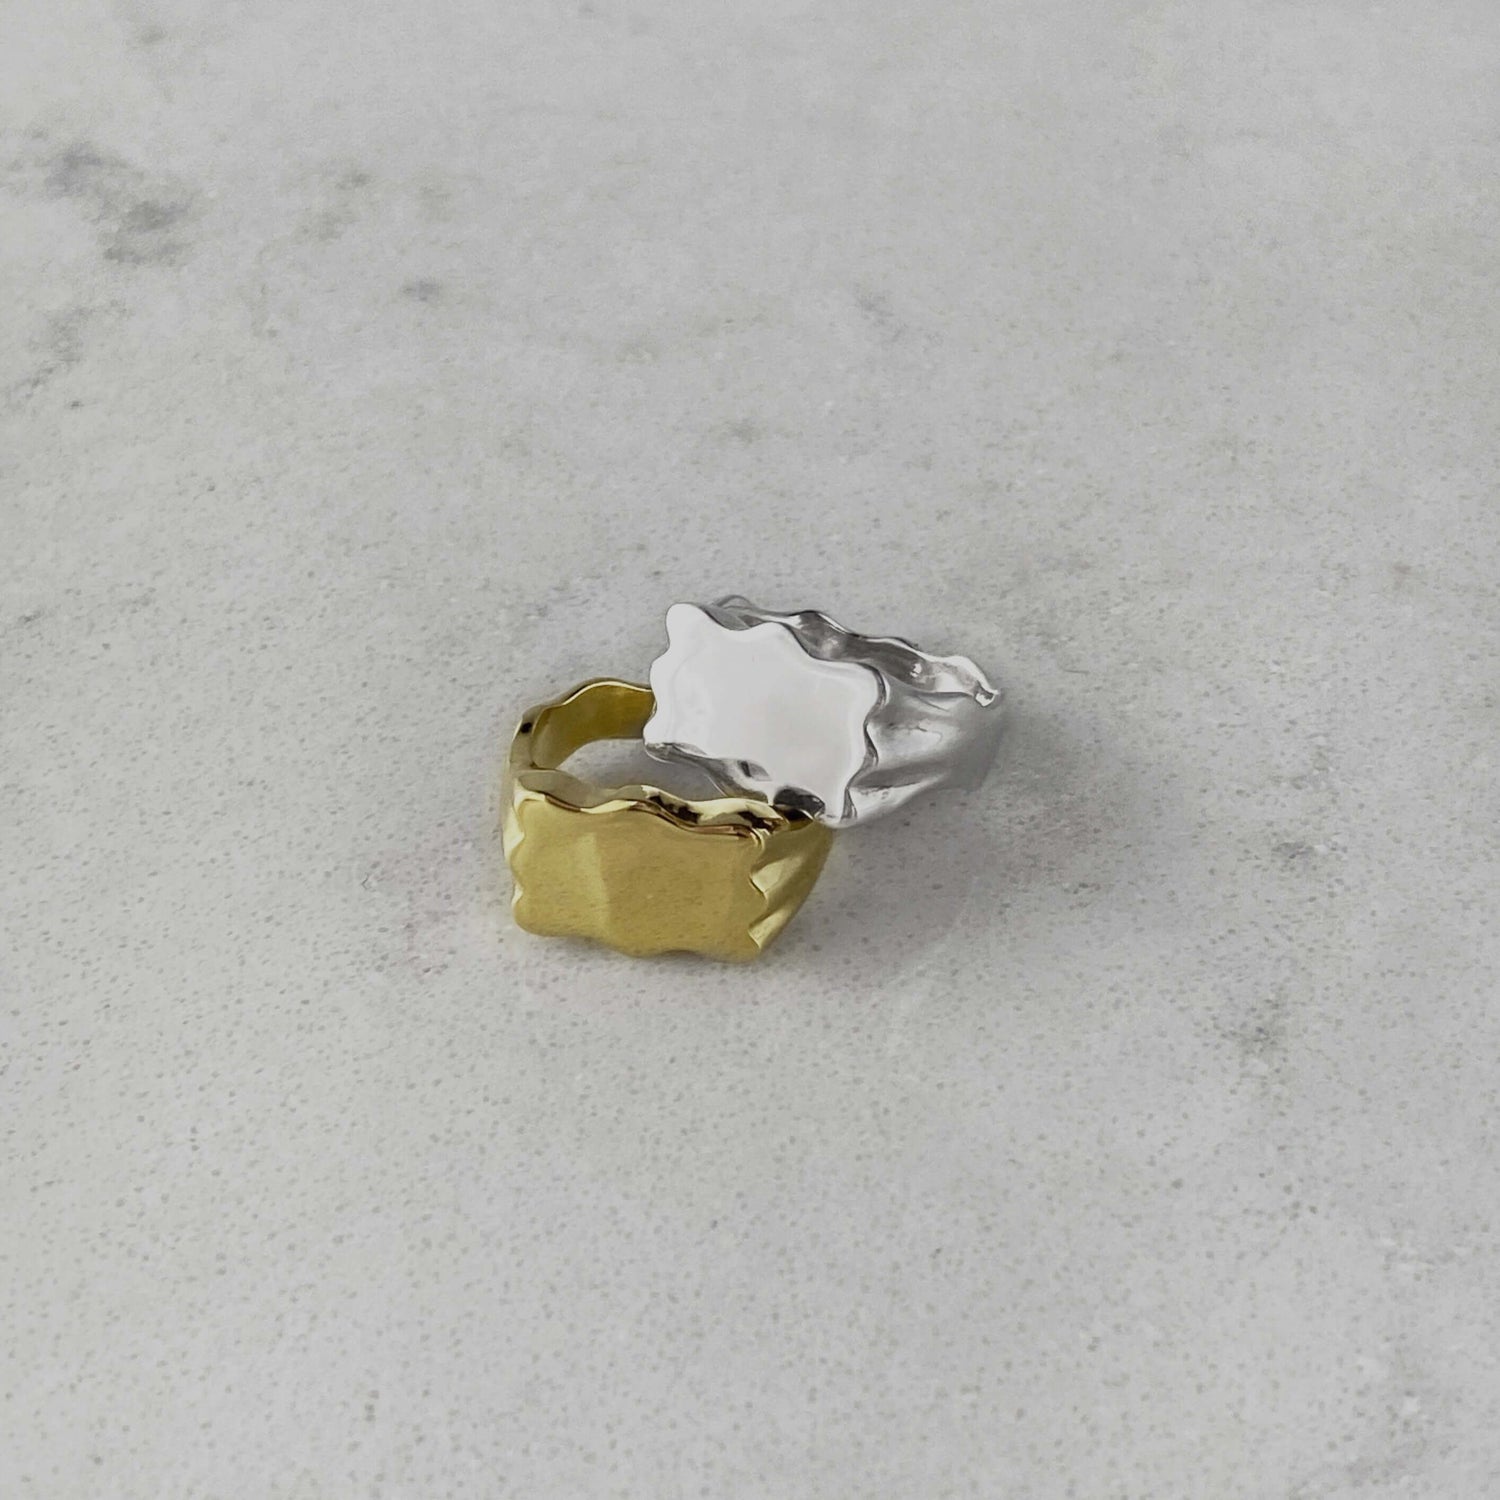 Edvard Signet Ring by Aur Studio, in silver